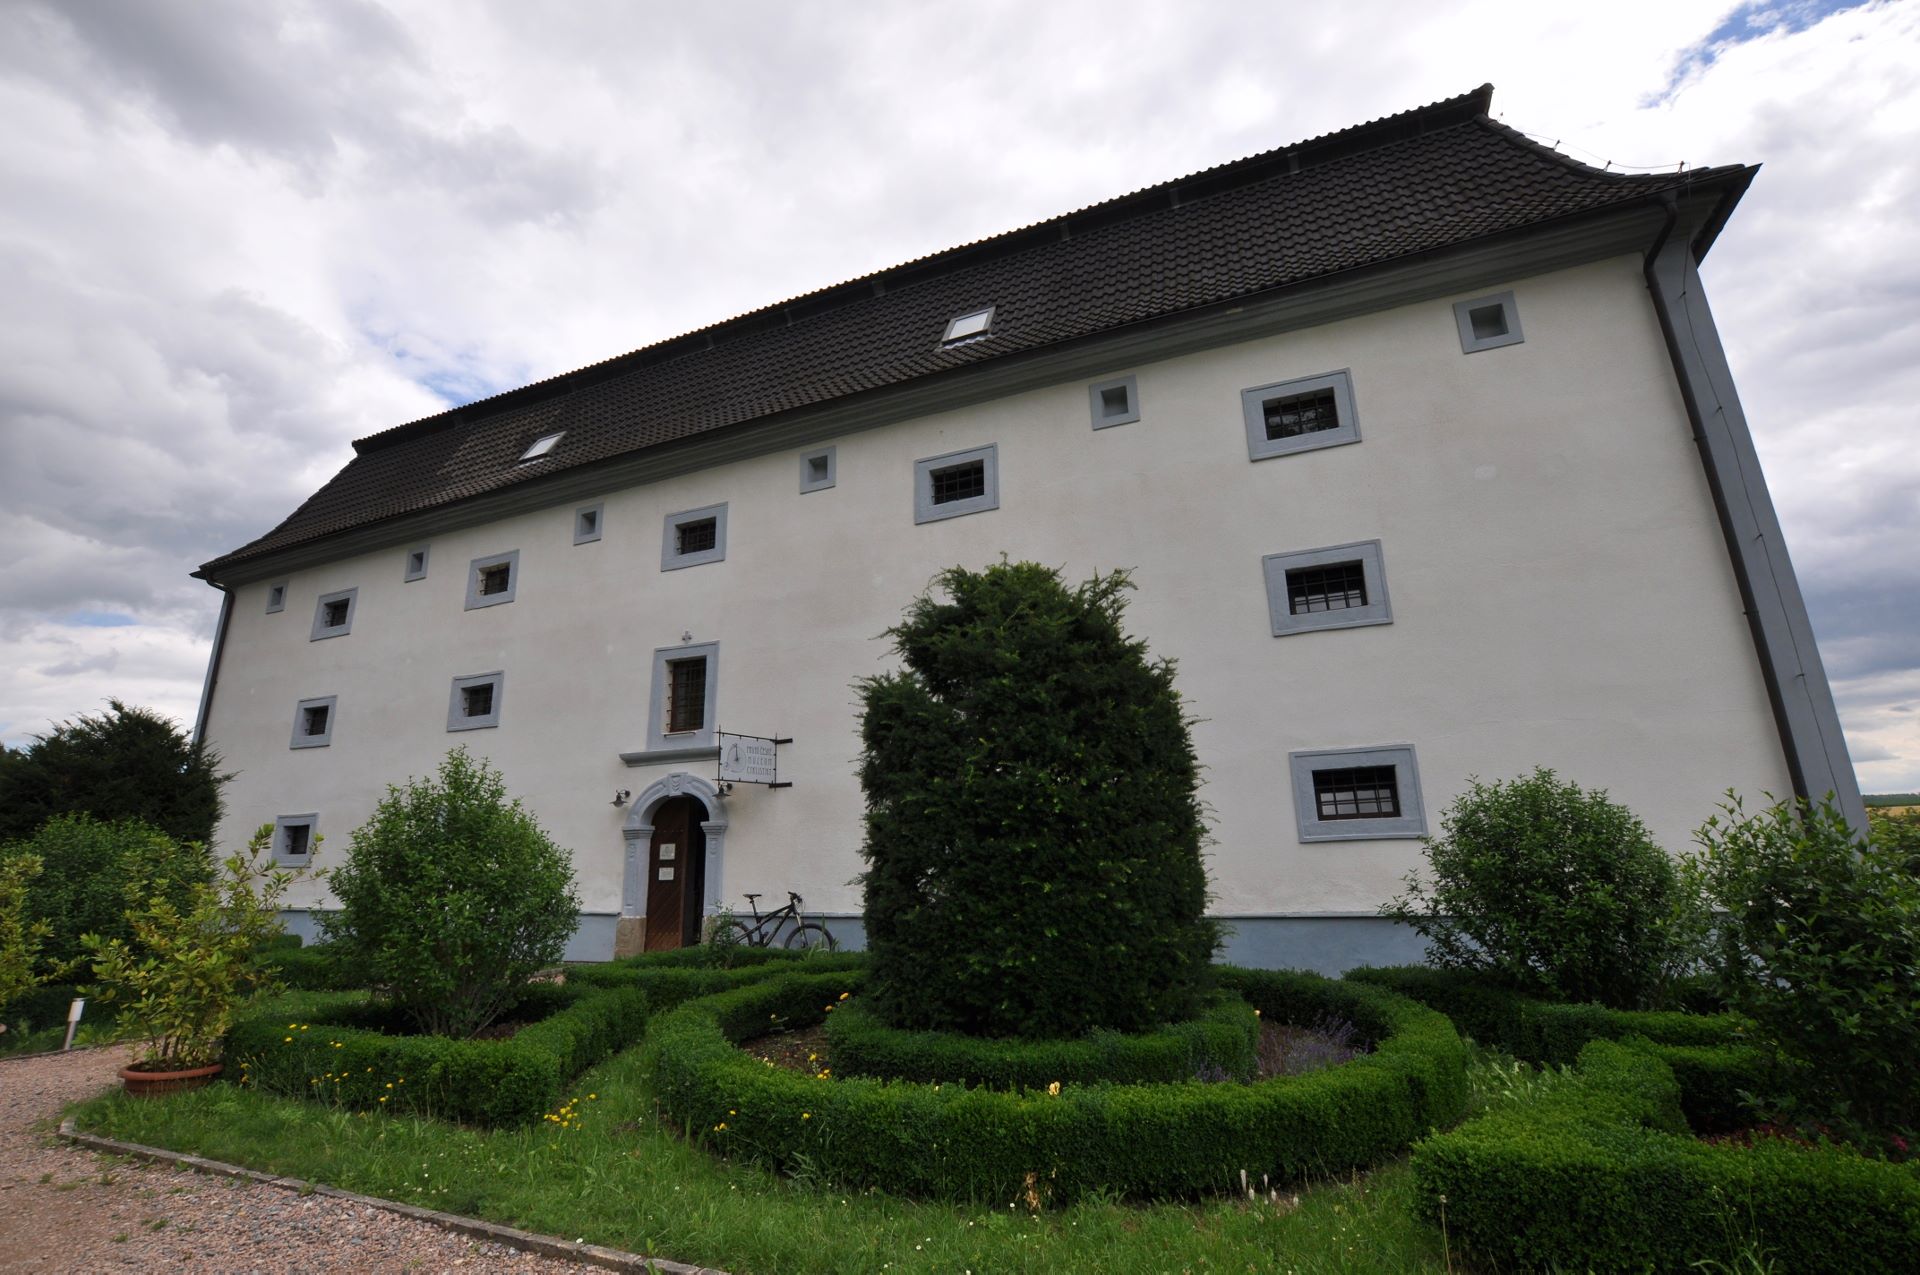 blog:2017-07-12-maerchenschloss-in-nove-hrady:2017-07-12-novehrady-084a.jpg